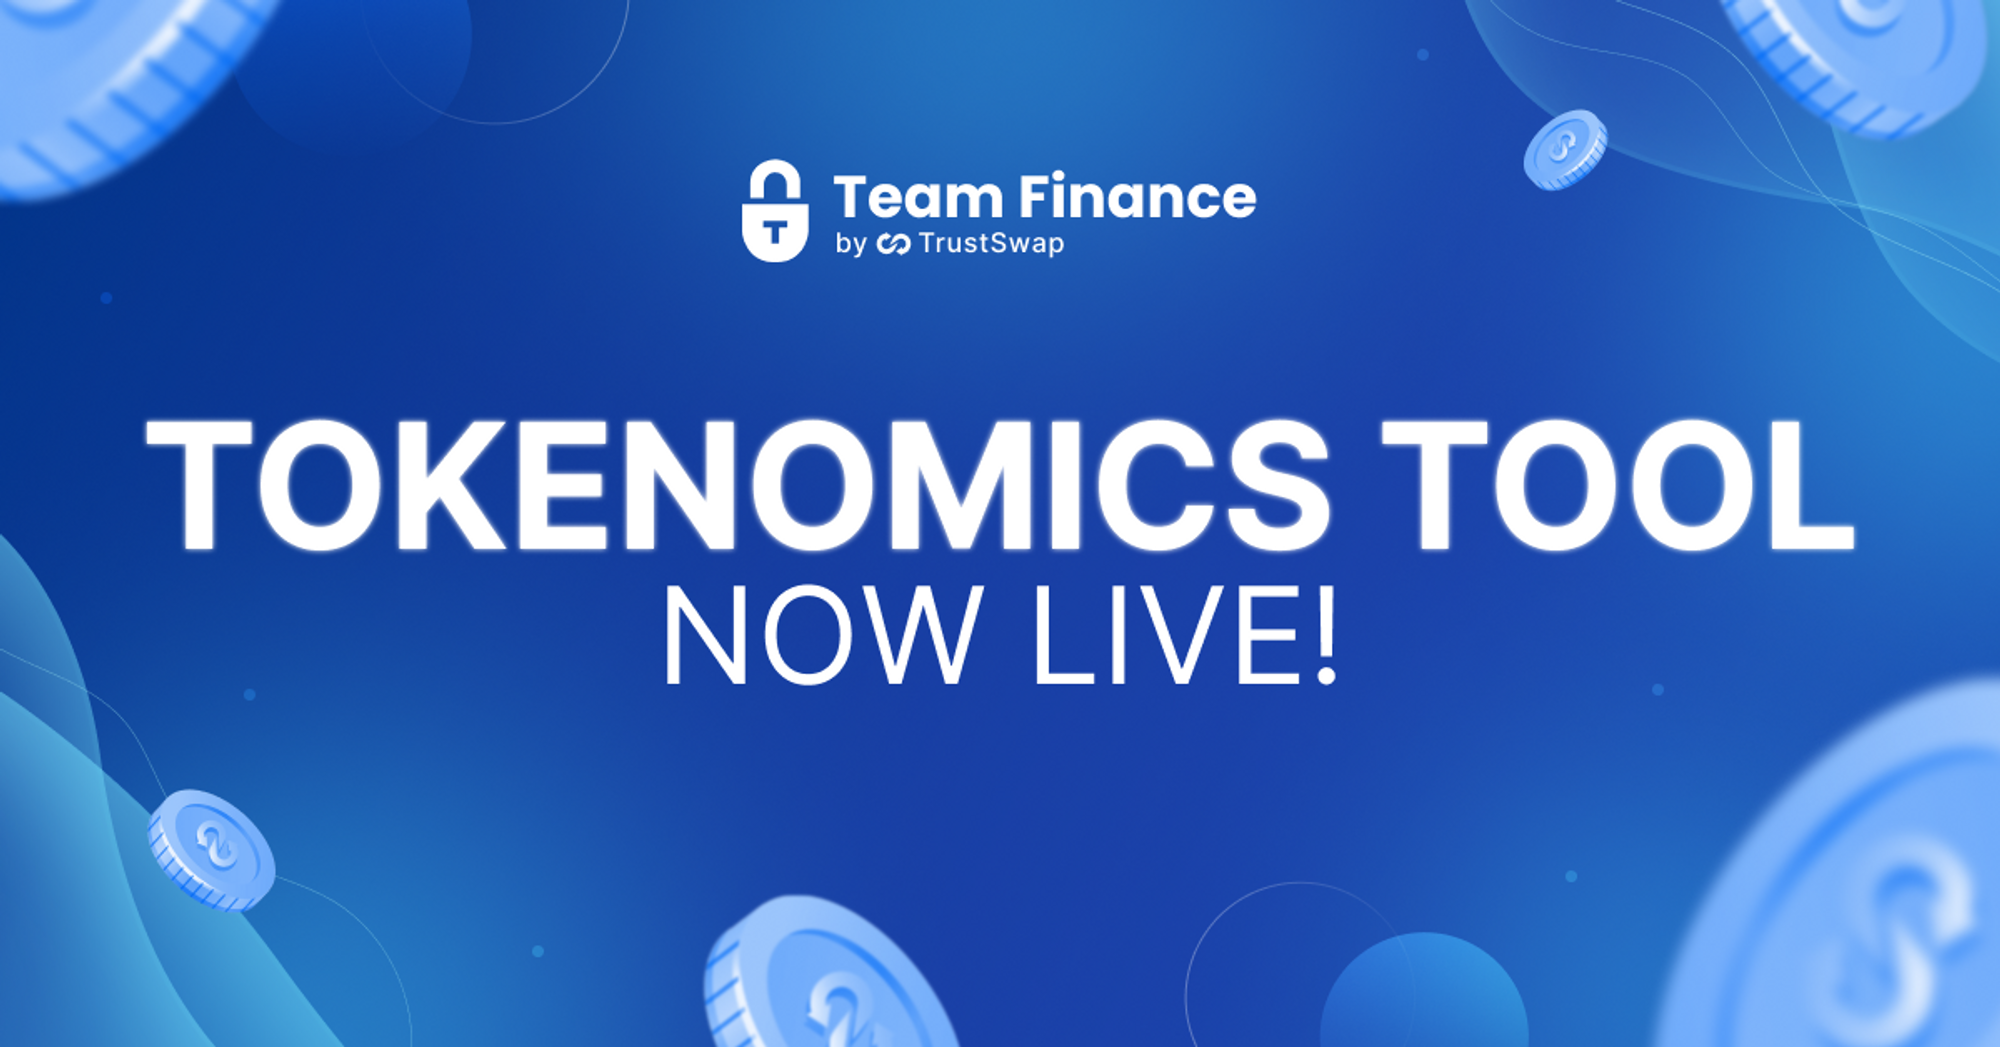 Team Finance Offers Free Tokenomics Tool